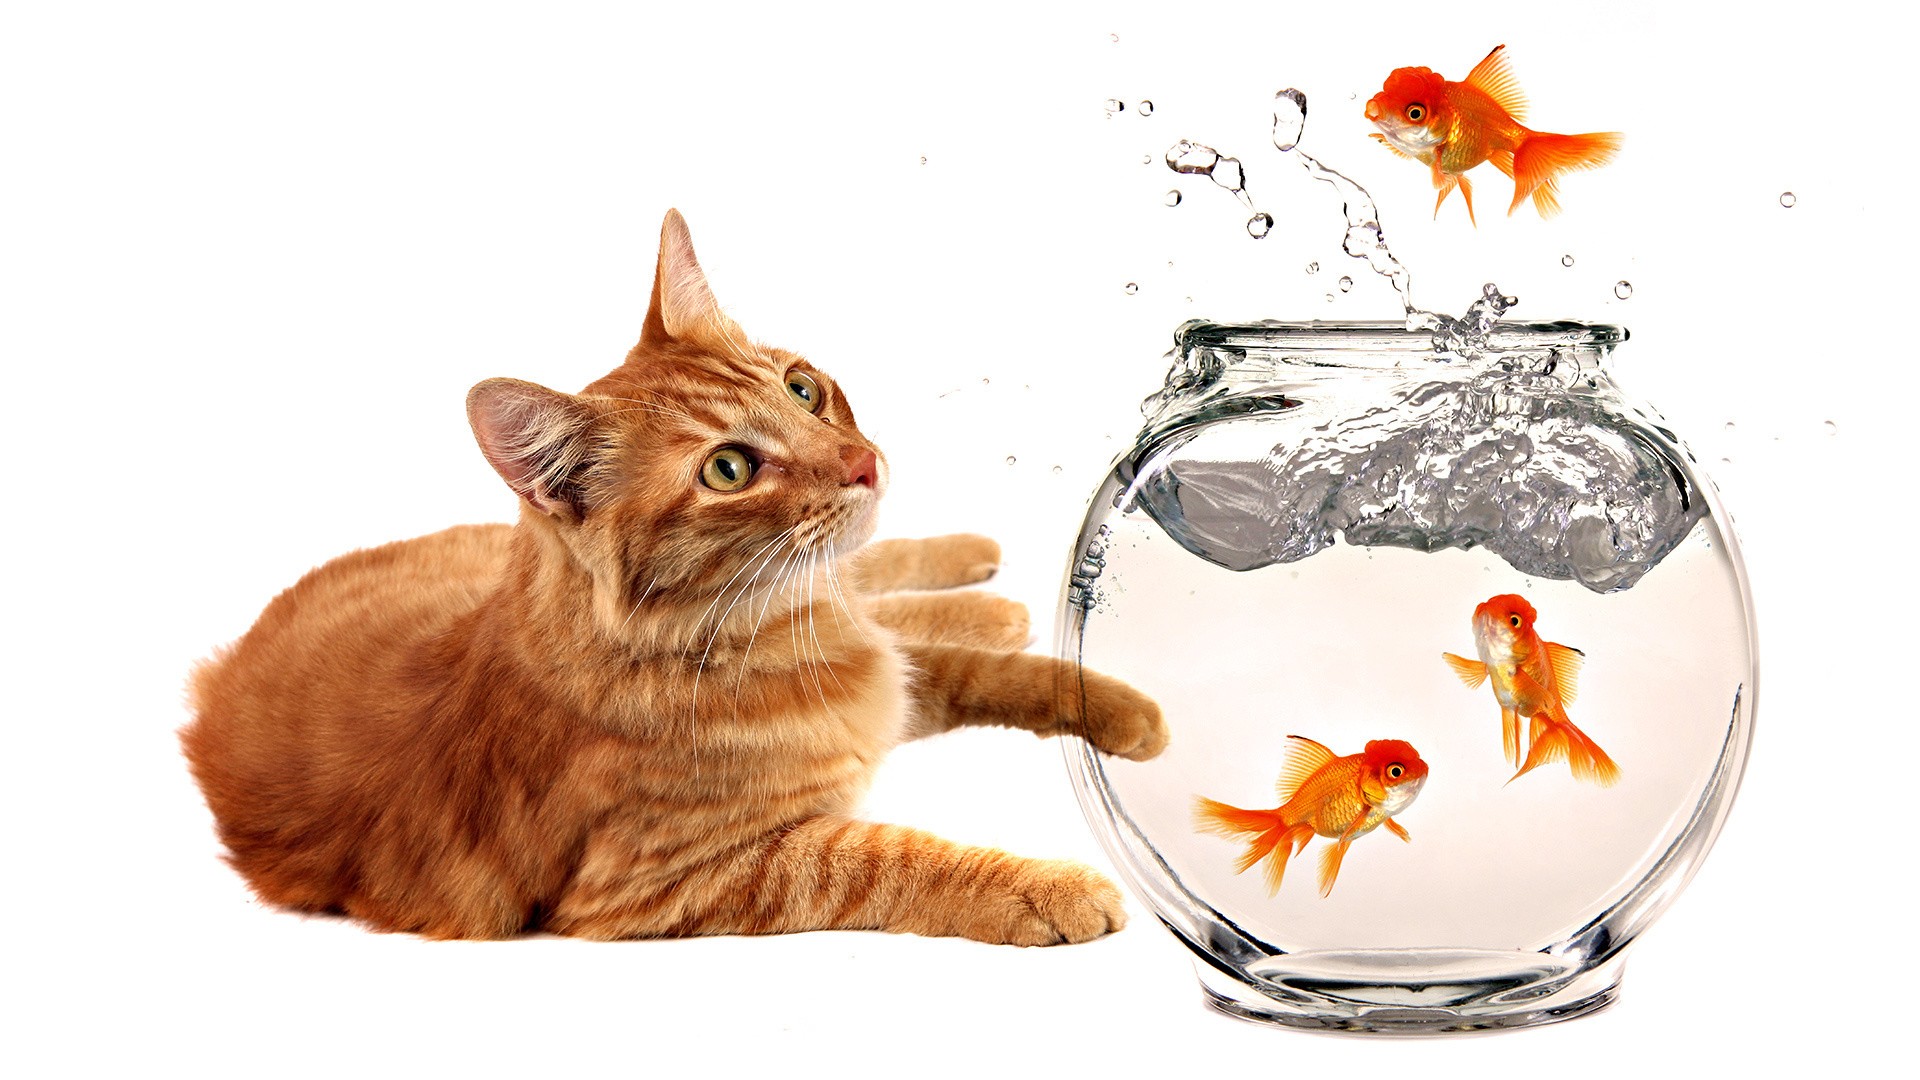 Free download Cats animals fish goldfish fish bowls wallpaper 1920x1080 232806 [1920x1080] for